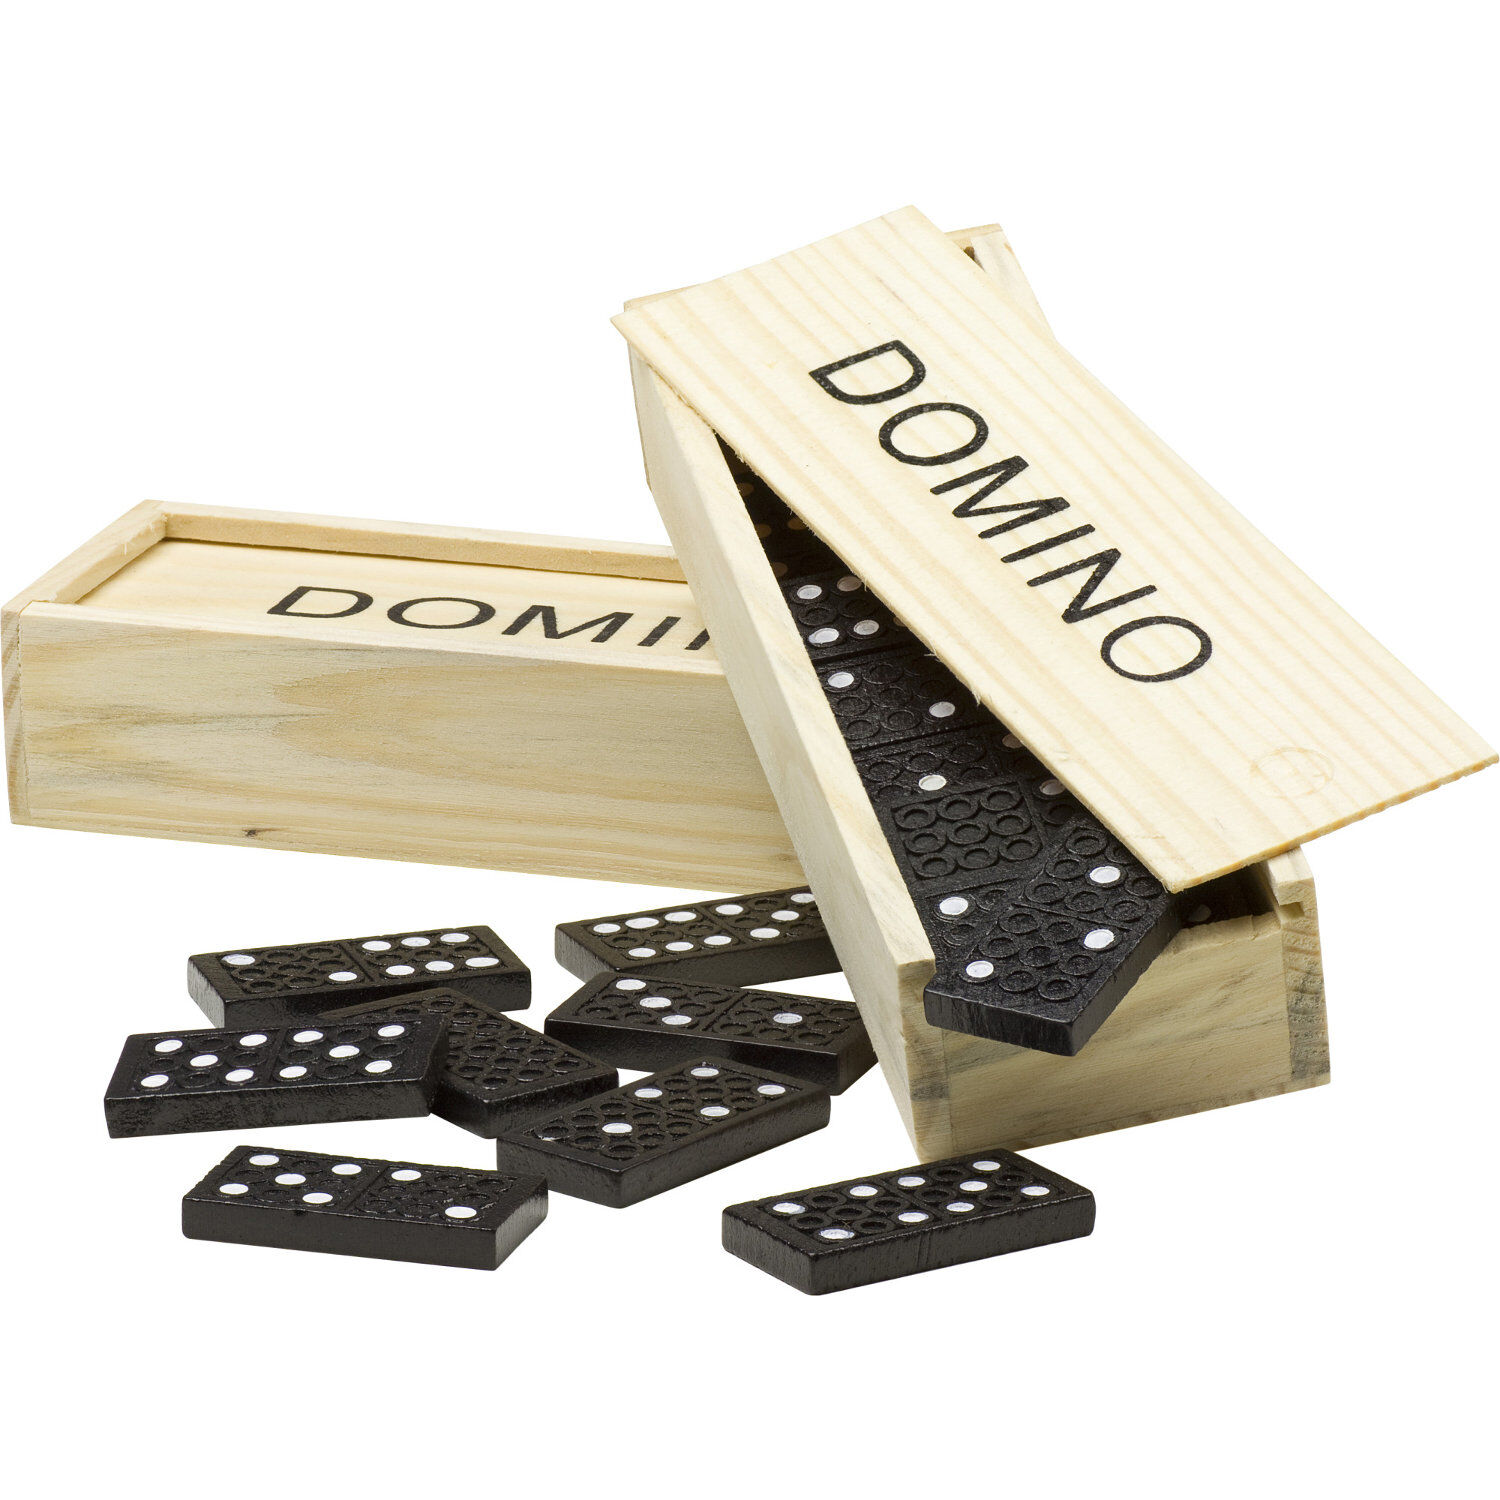 Domino Set in Wooden Box